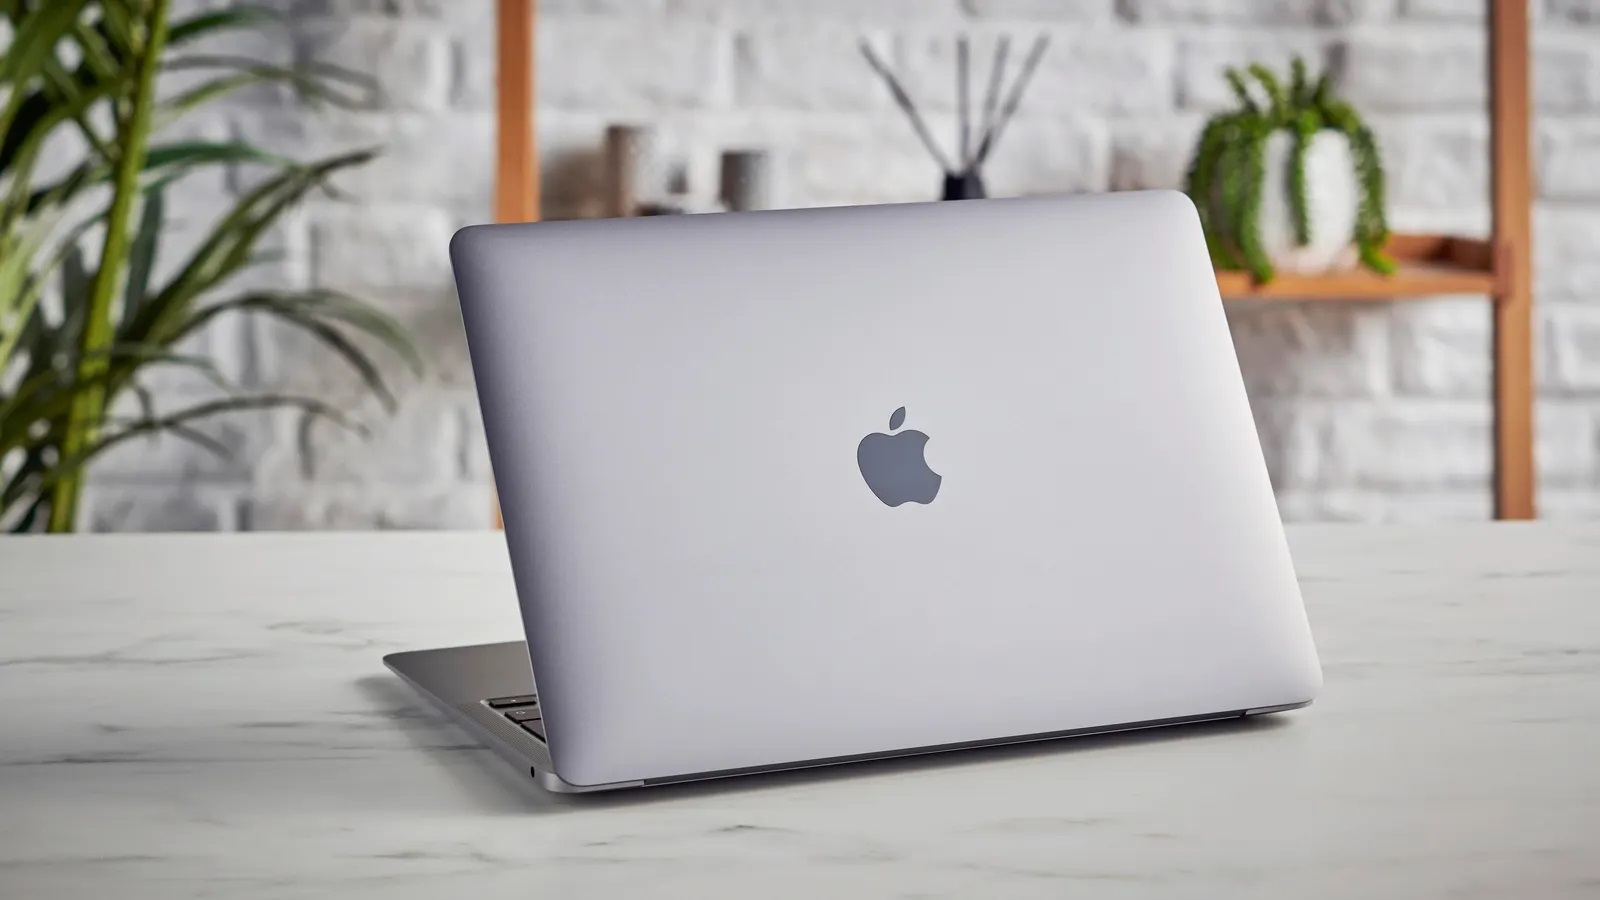 Score A Refurbished MacBook Air For Under $300